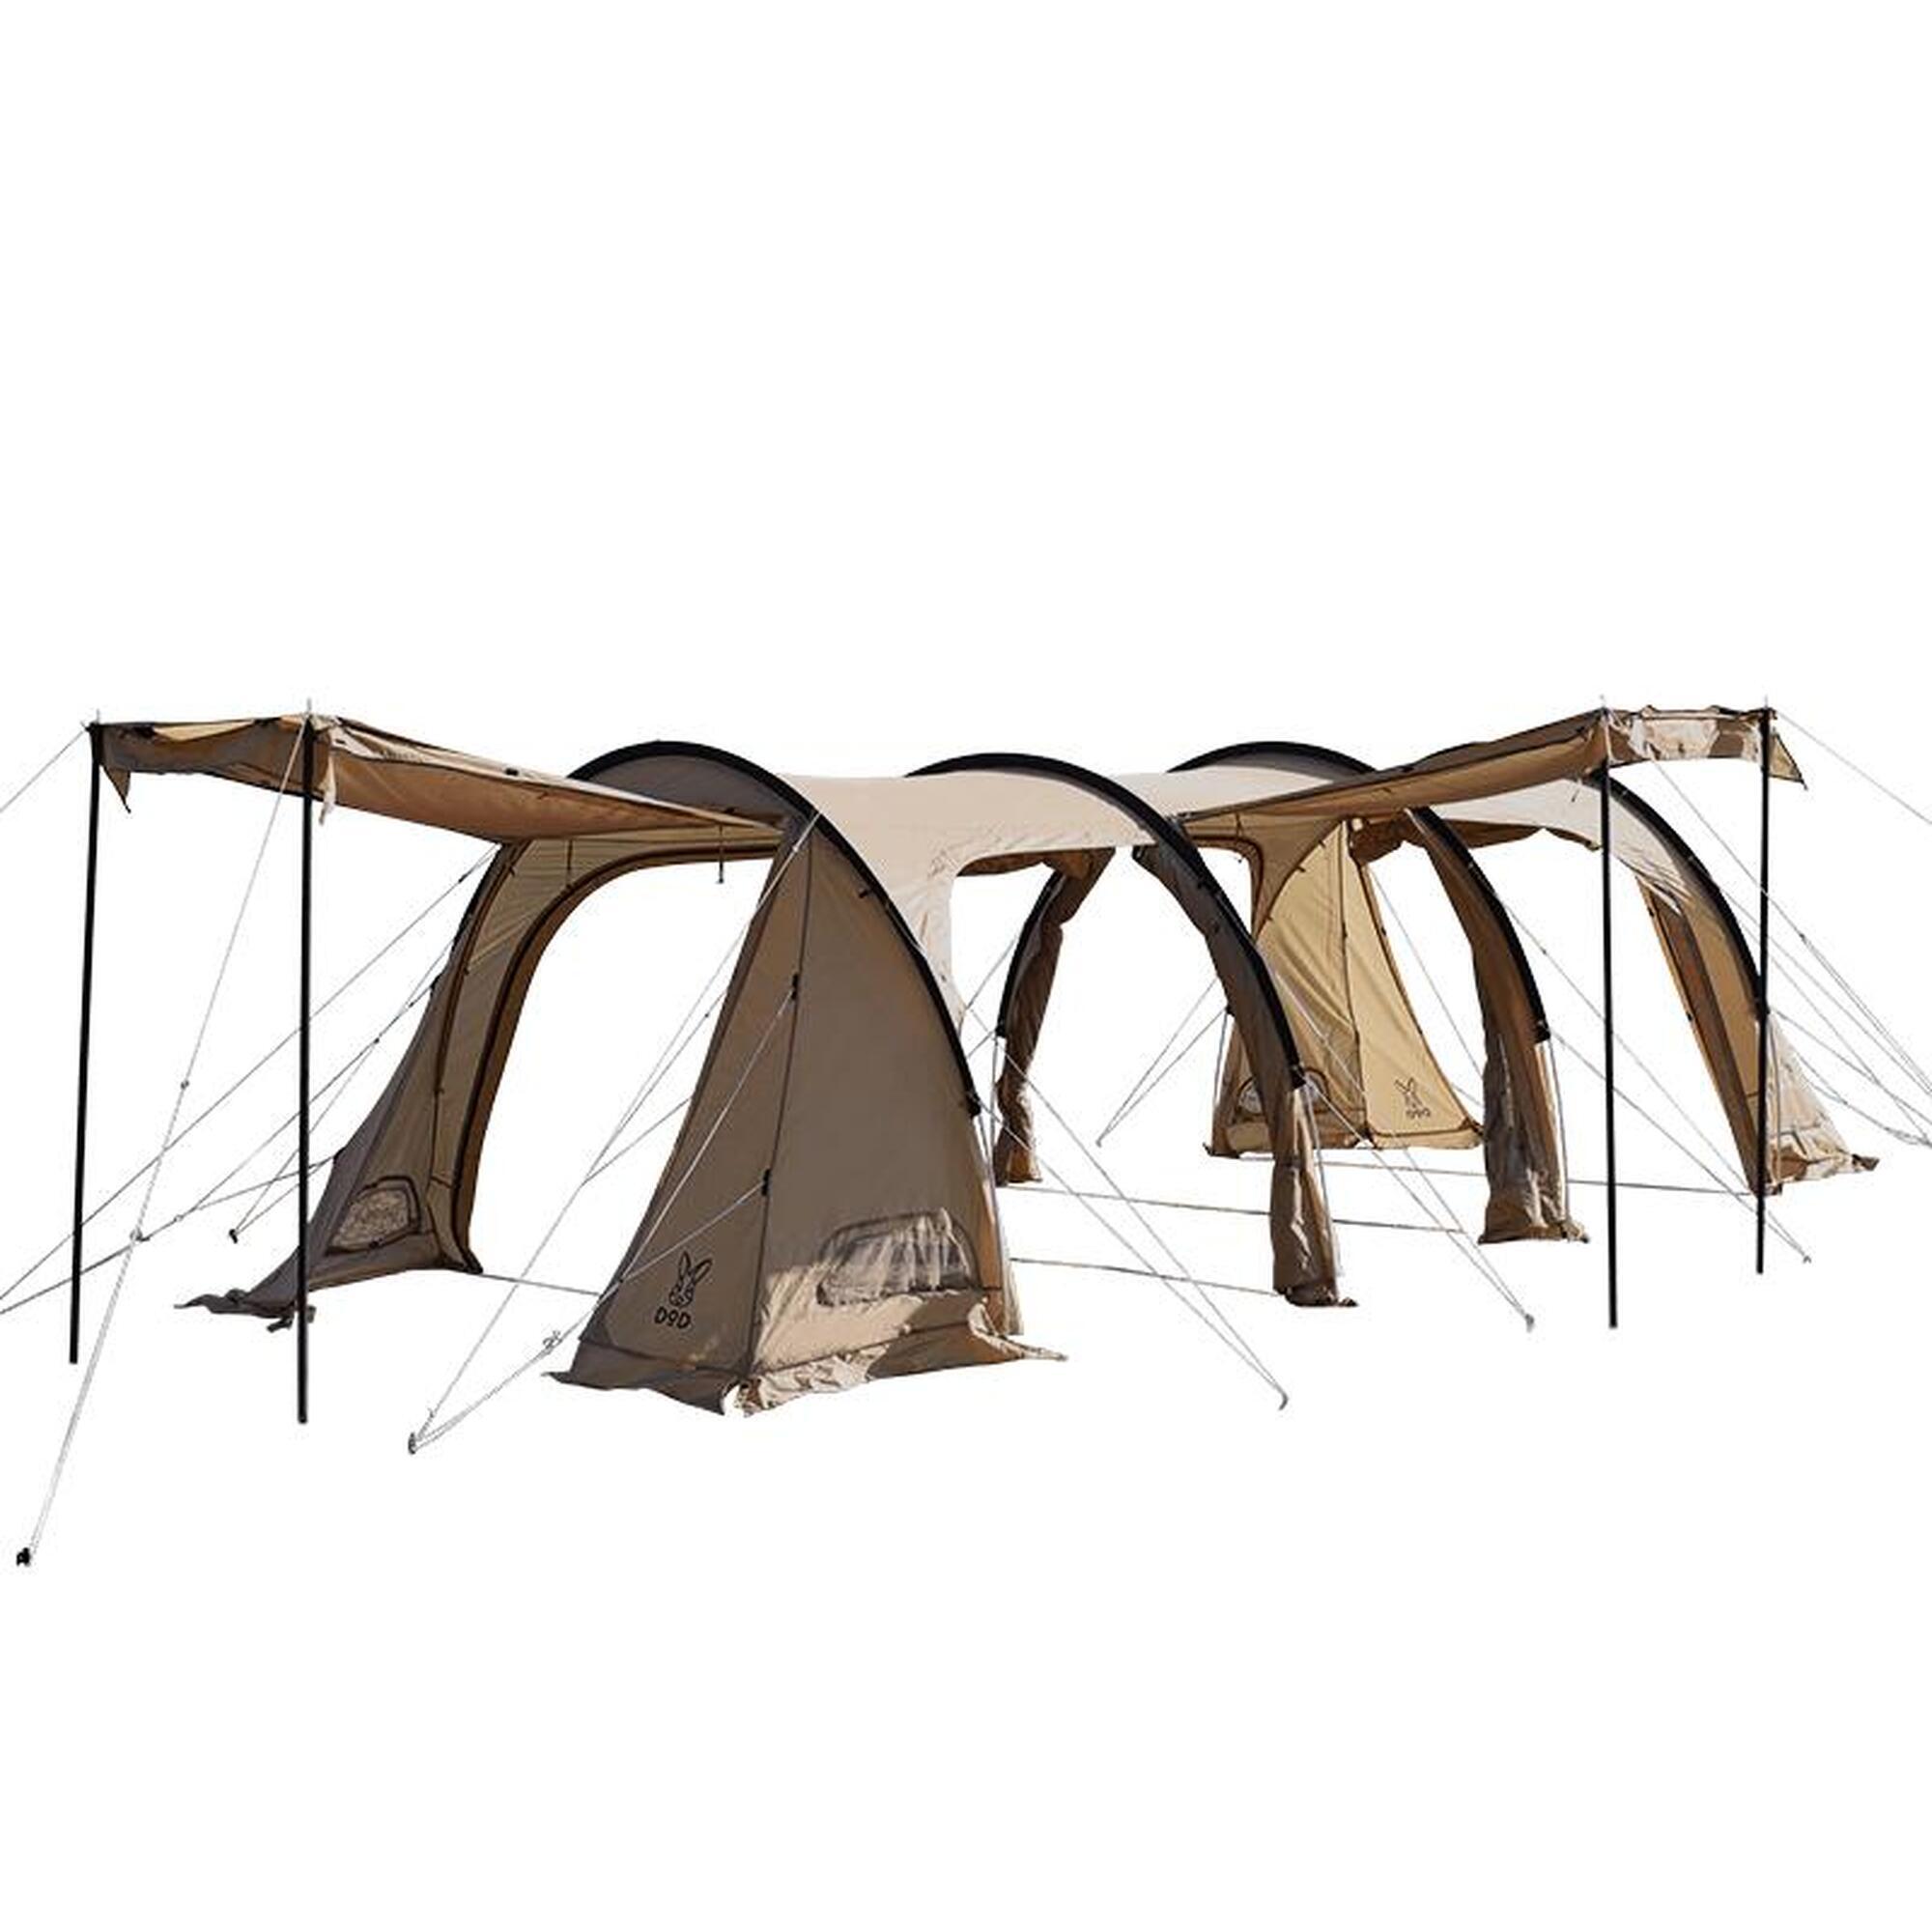 KAMABOKO TENT 3 (M) T5-689-TN 5 Person Camping Tent - Tan